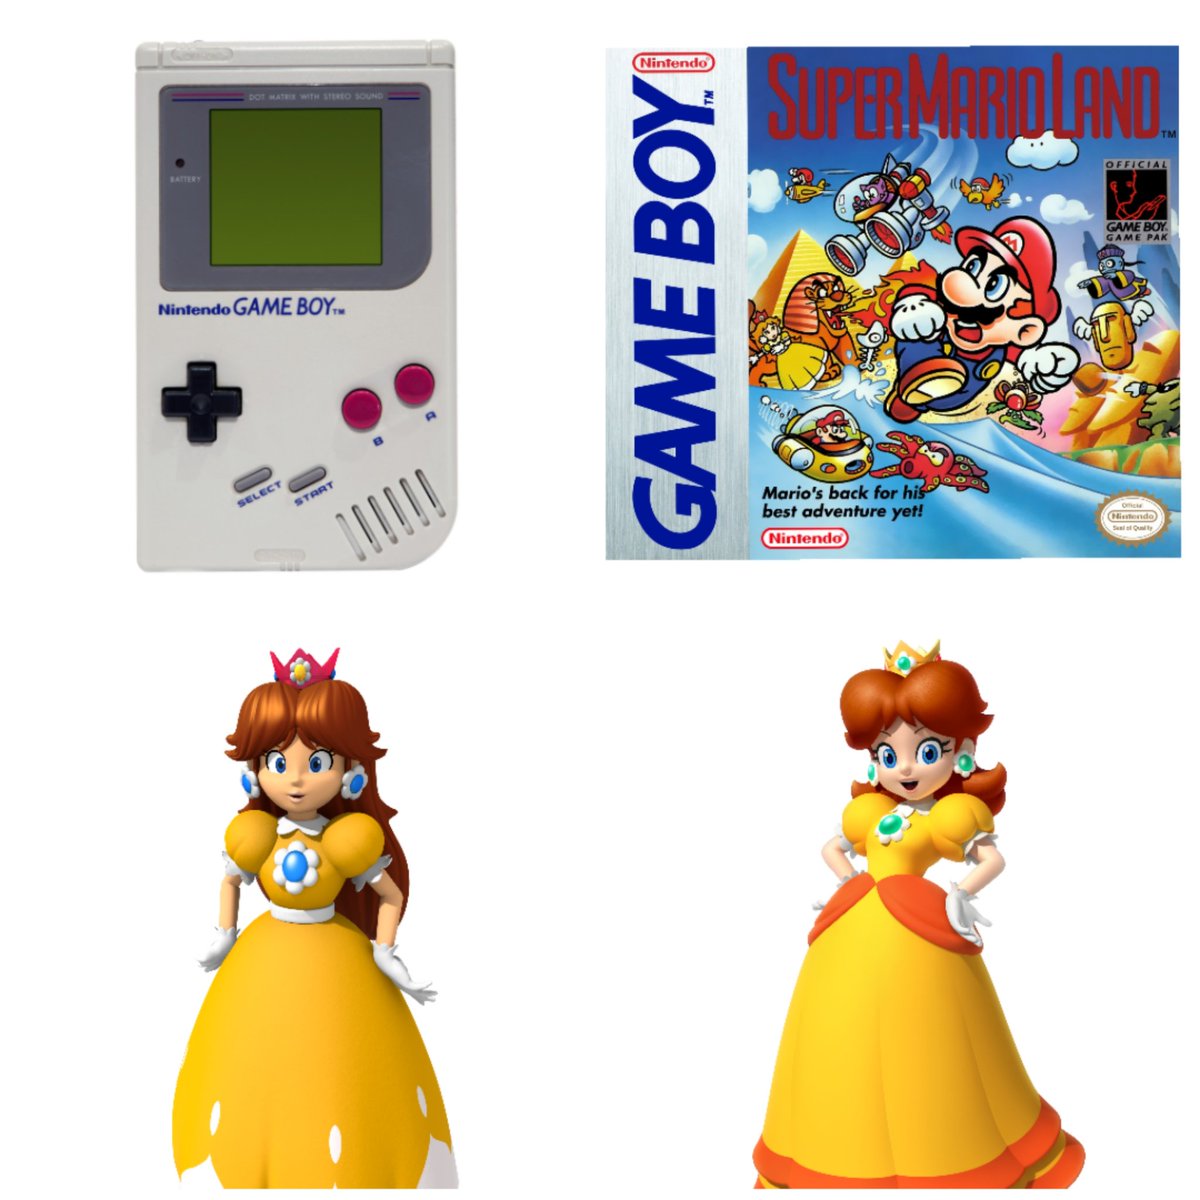 Happy 35th anniversary to the original Gameboy & Princess Daisy! 🌼🎮🍄

#nintendo #supermariobros #nintendofan #gamer #princessdaisy #videogames #gamer #yellow #orange #daisy #mario #supermarioland #like #comment #share #follow #35thanniversary #gameboy